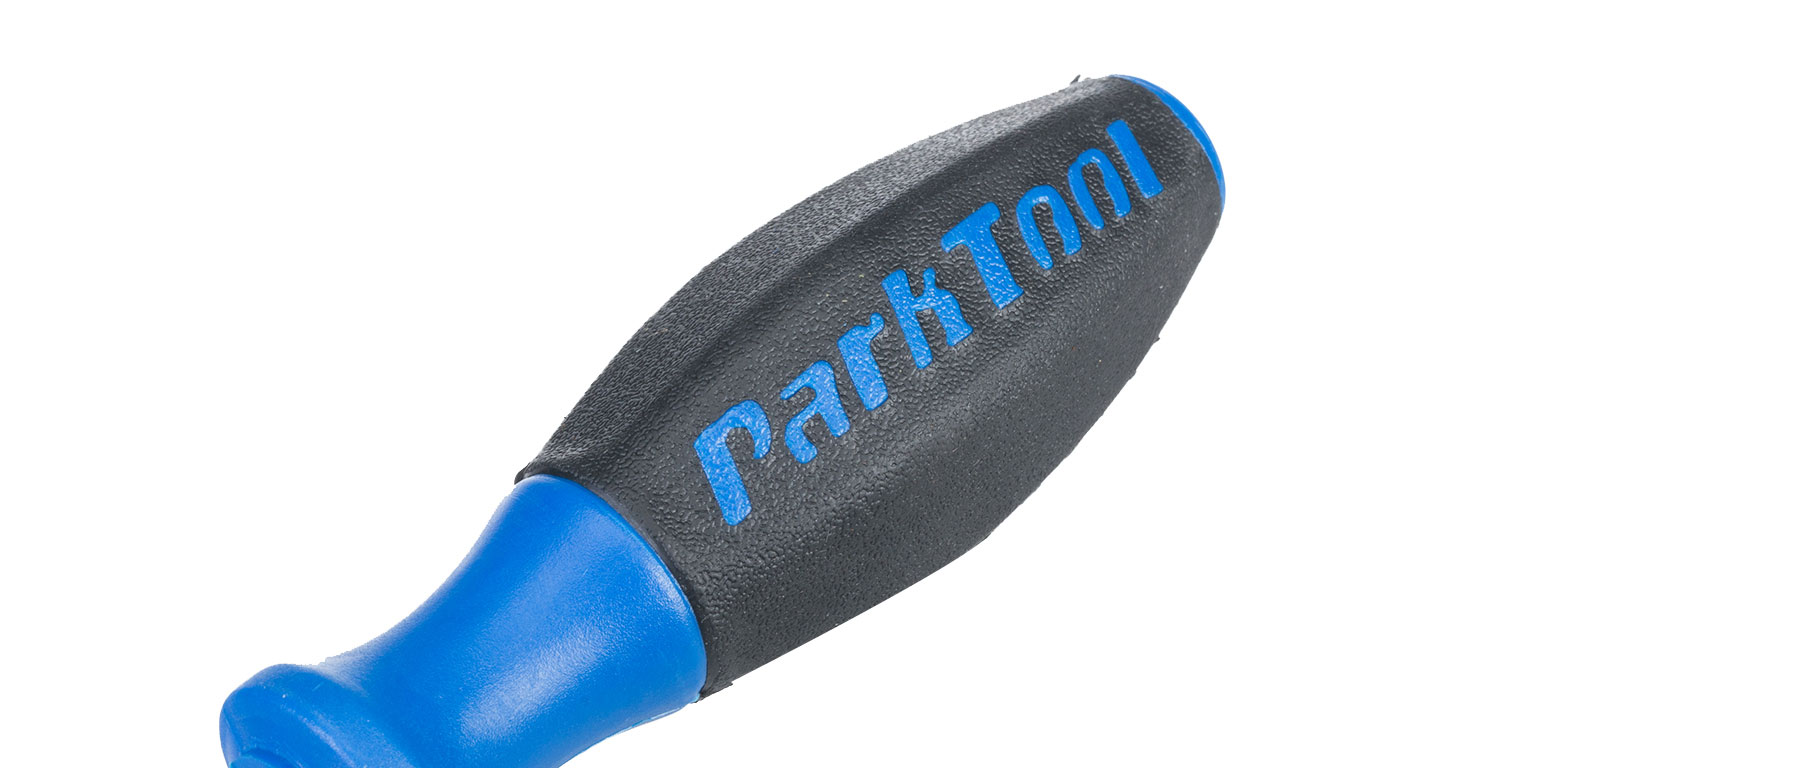 Park Tool SW-19 Internal Nipple Spoke Wrench 6.0mm